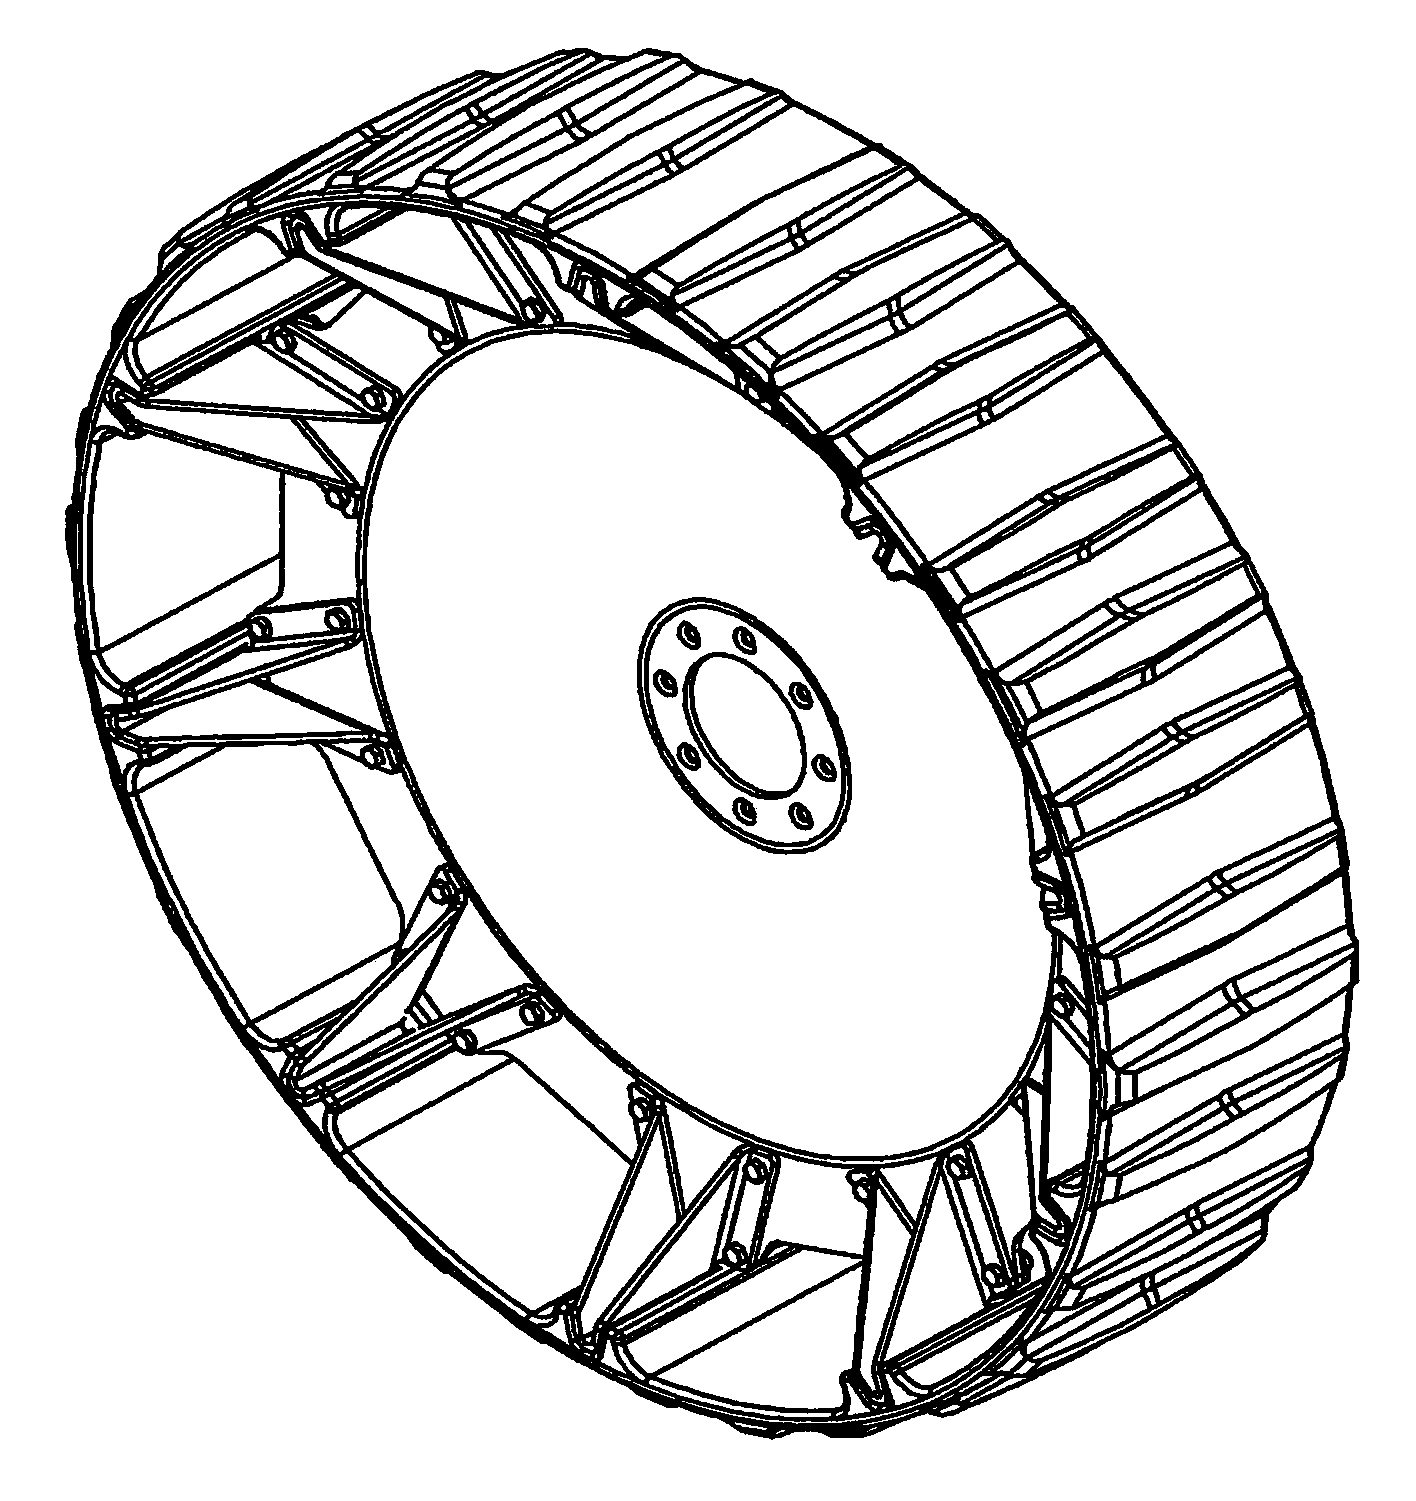 Ram-type composite pedrail wheel